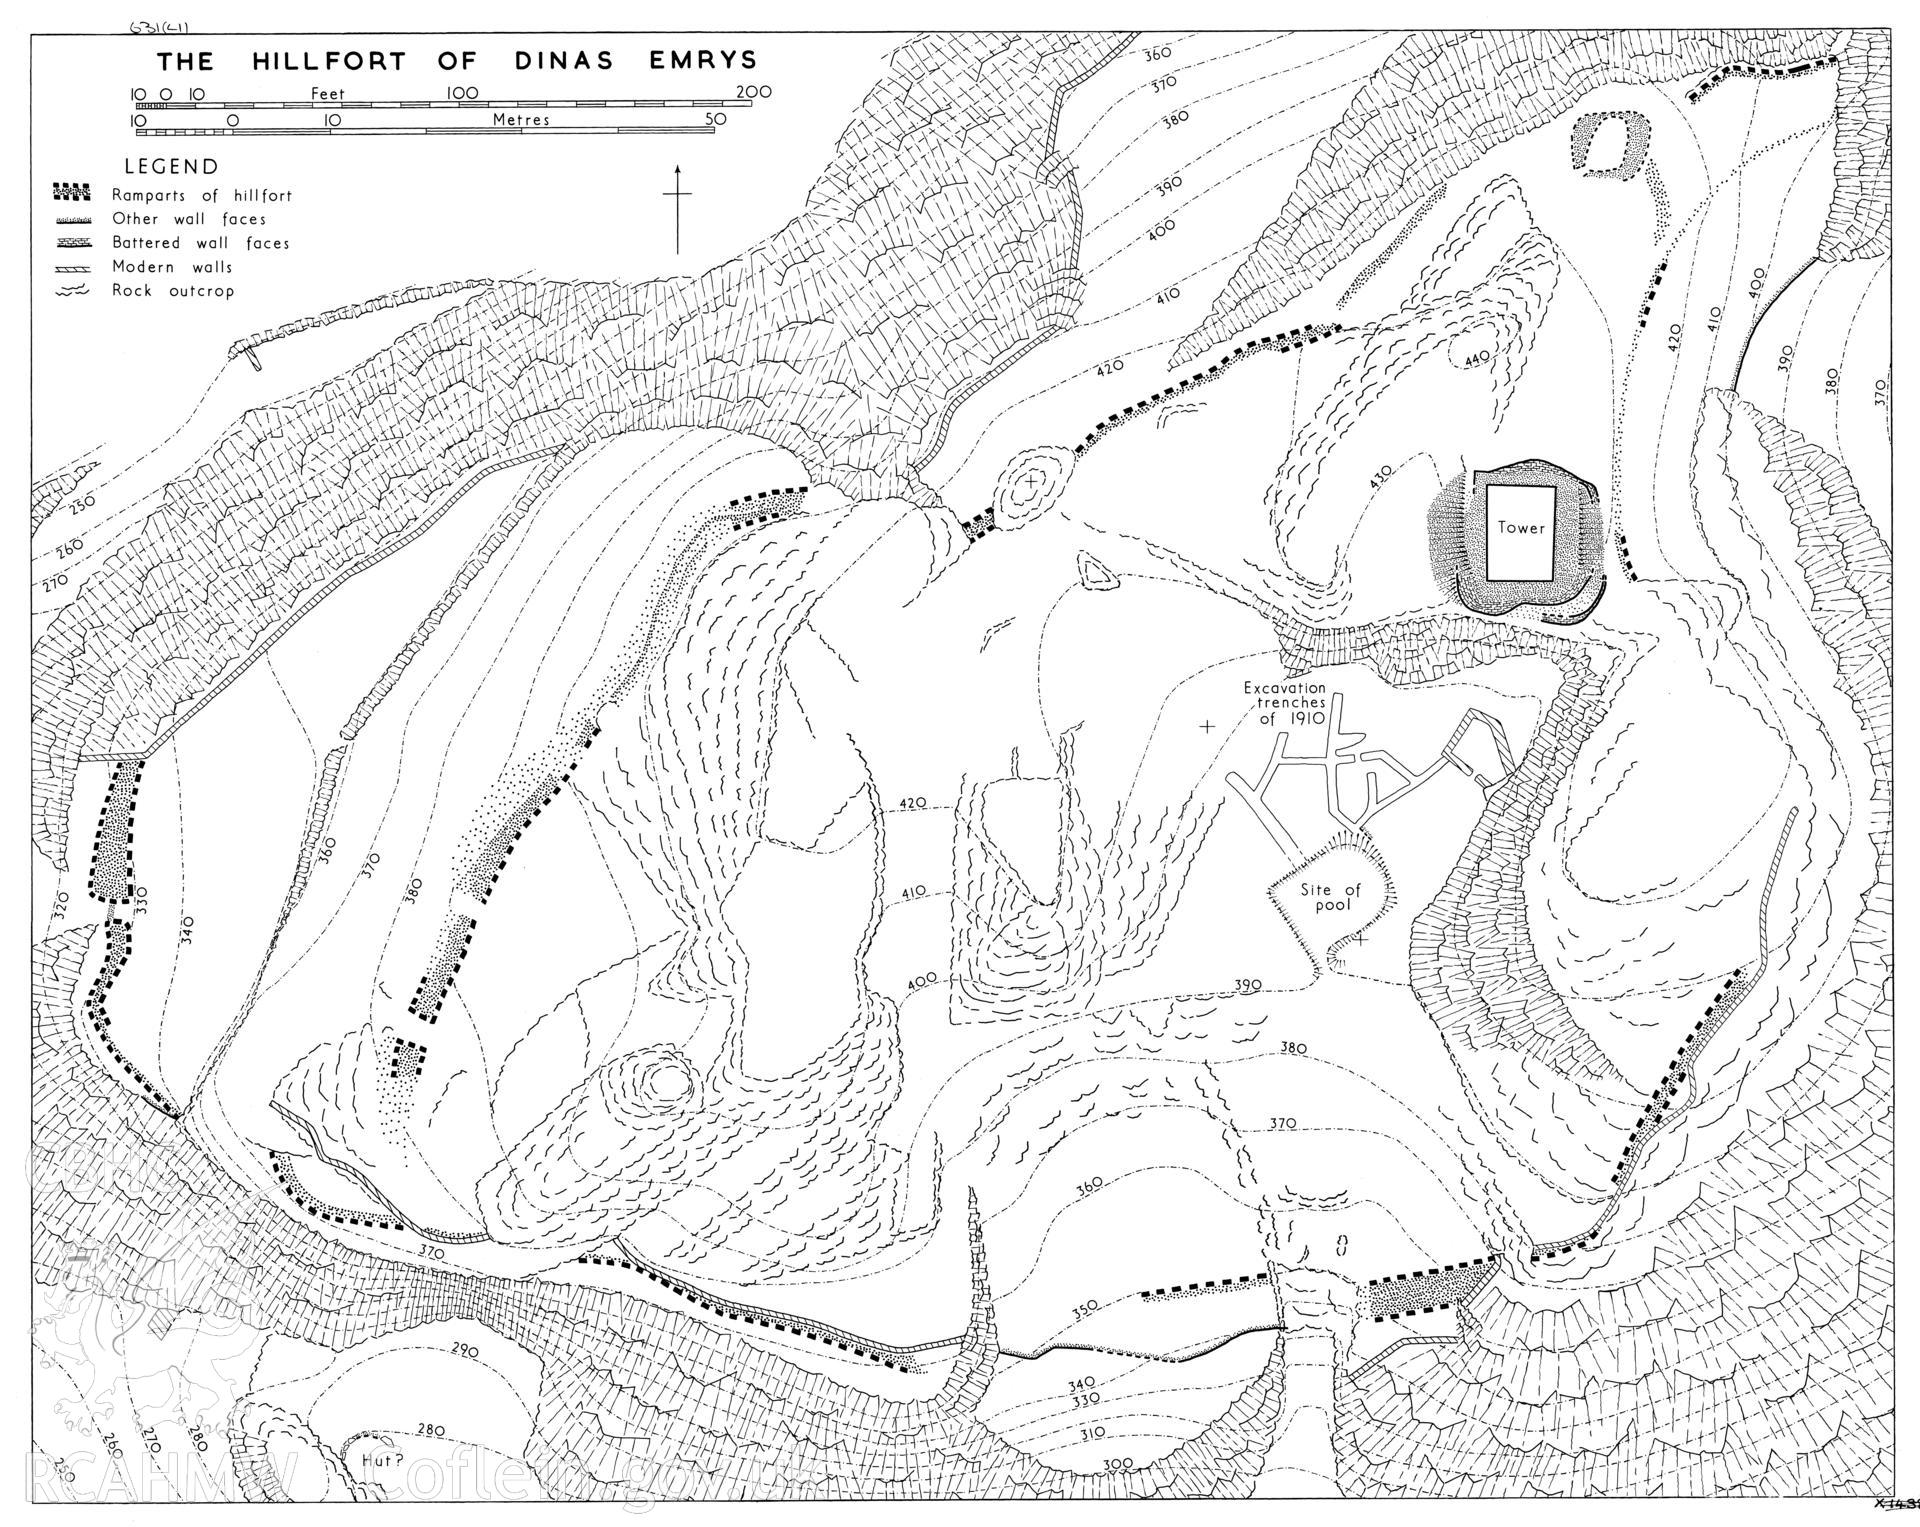 RCAHMW drawing (ink on linen) showing plan of Dinas Emrys, Beddgelert.